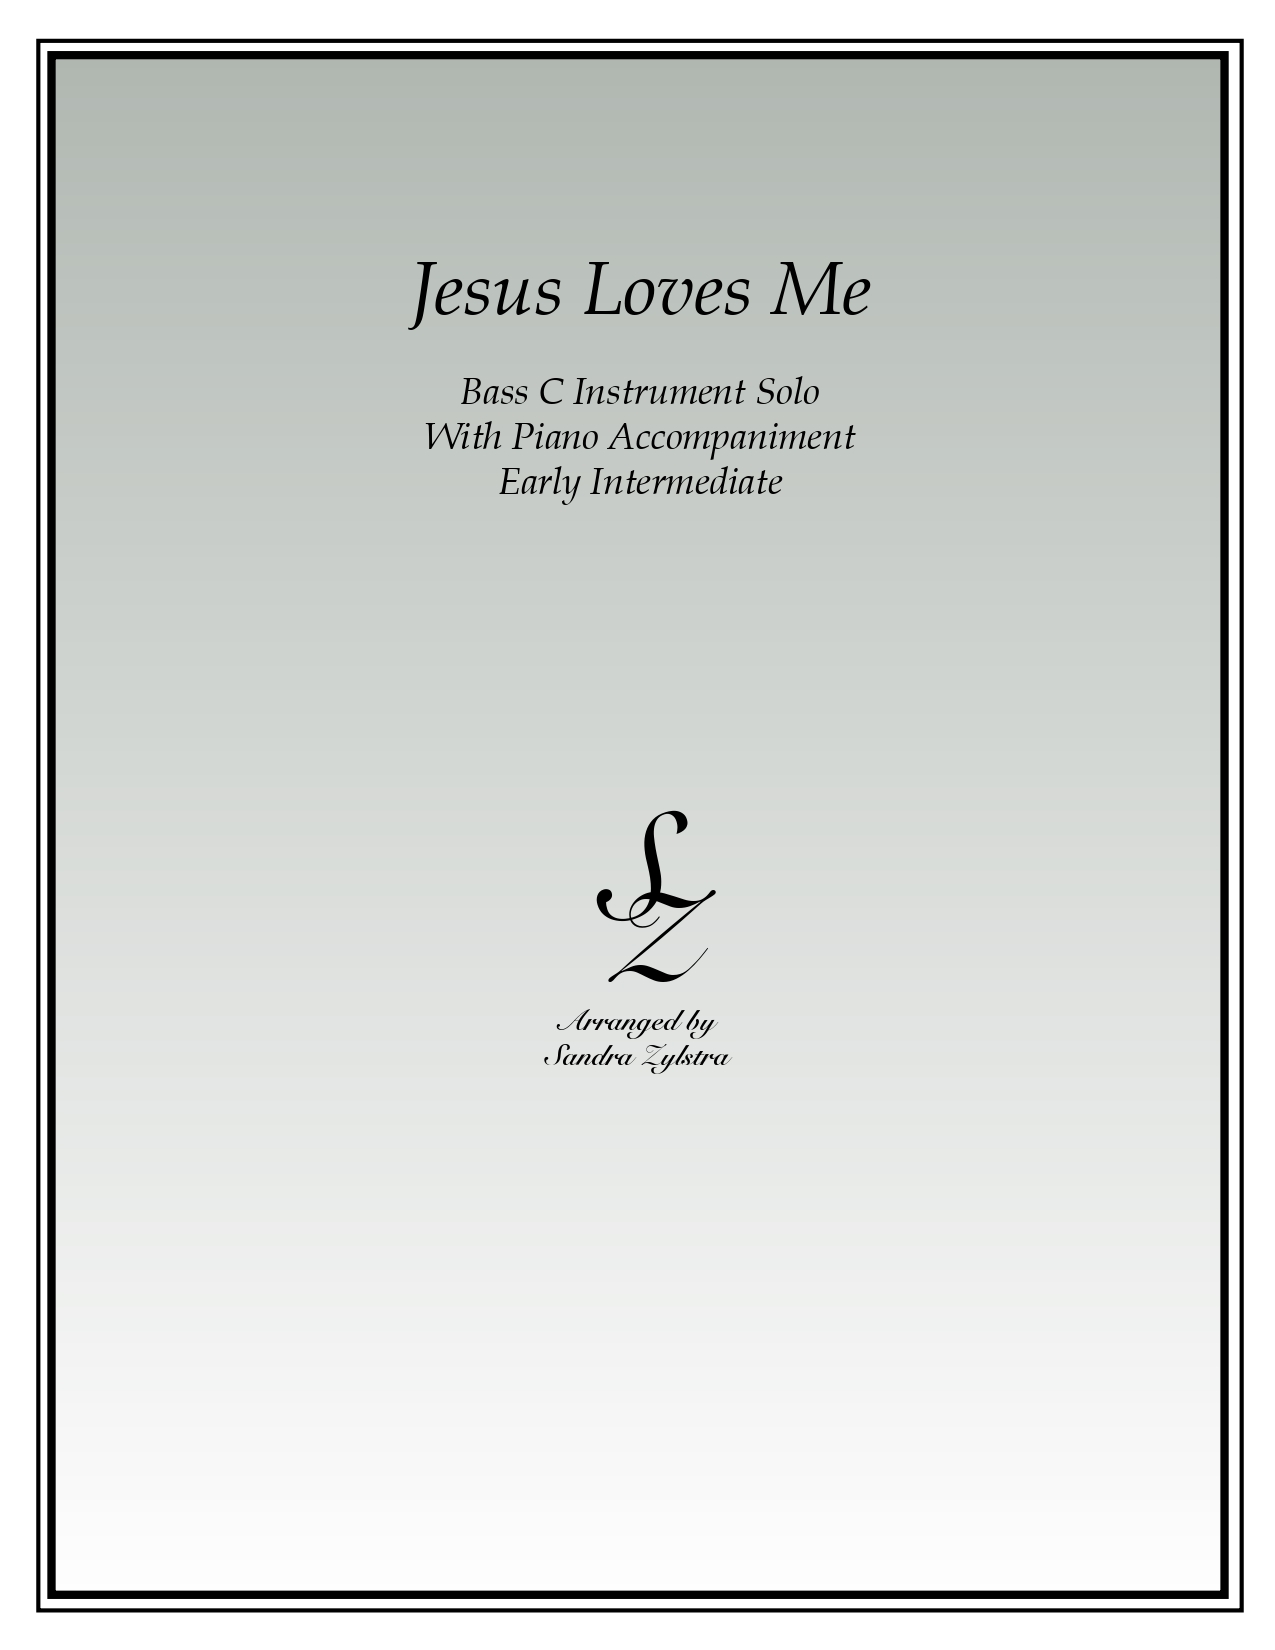 Jesus Loves Me bass C instrument part cover page 00011